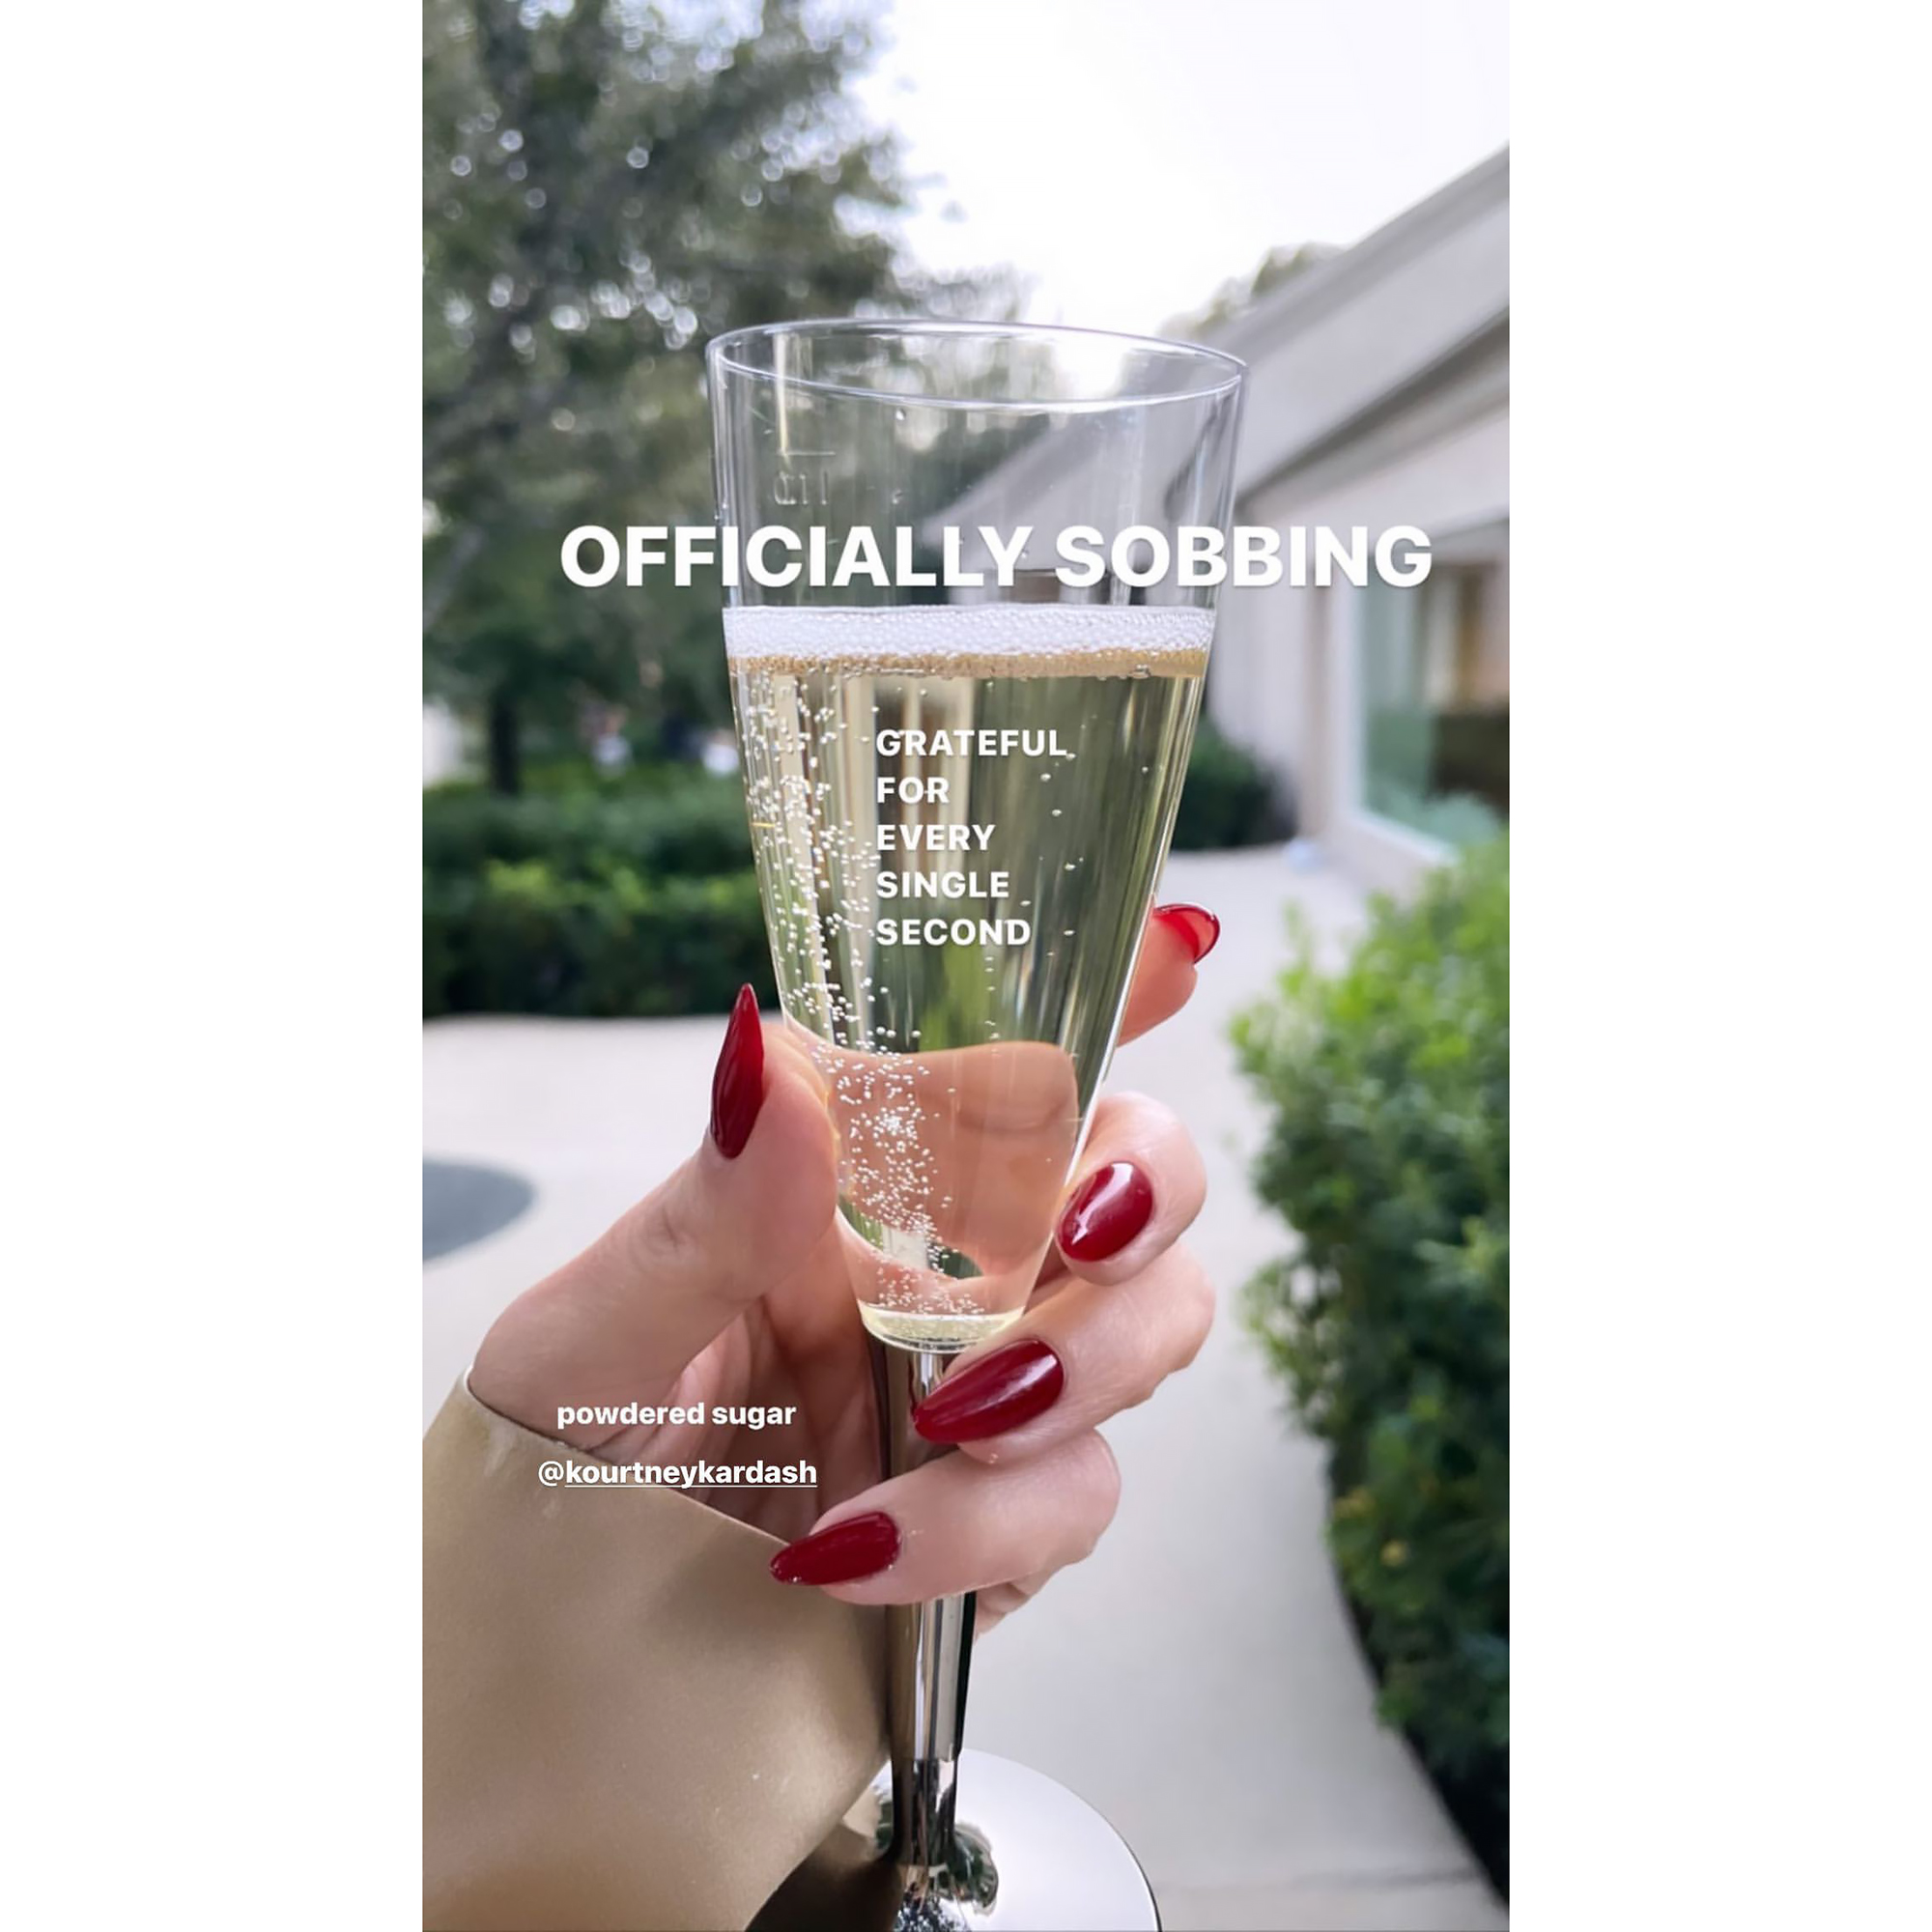 Robert paul champagne instagram